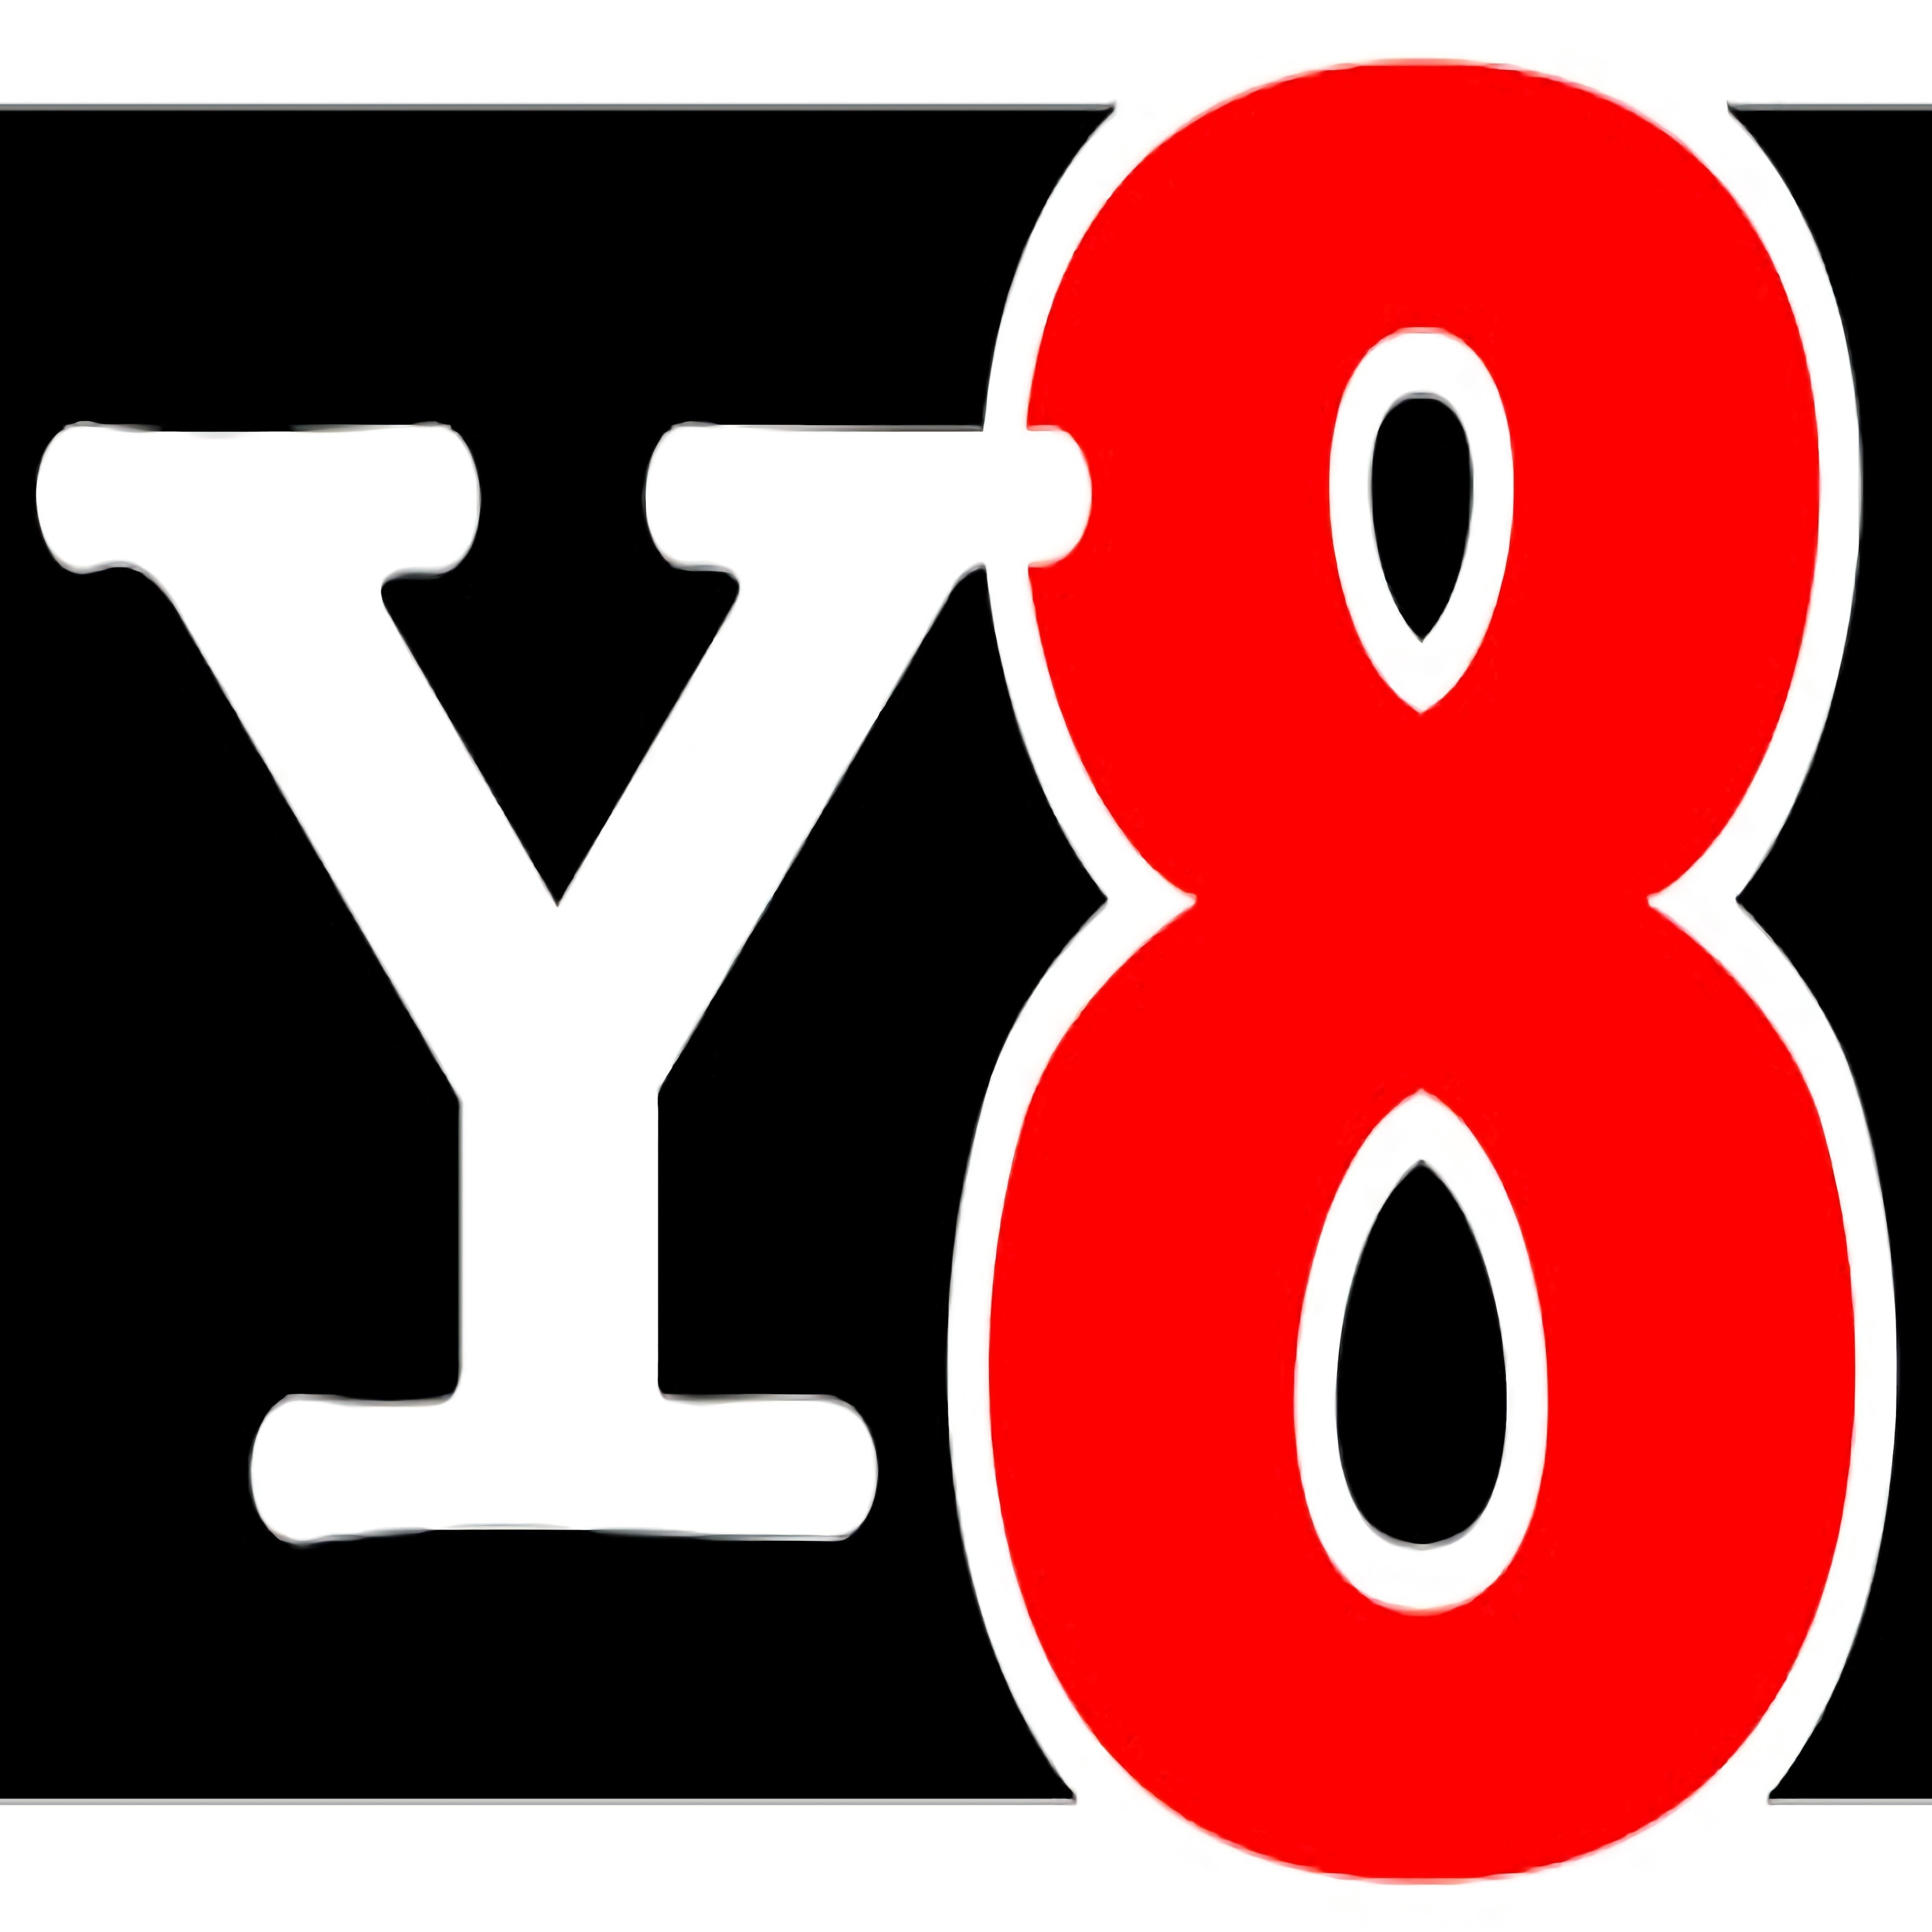 Trò chơi Y8 - Y8 Games trên Desura